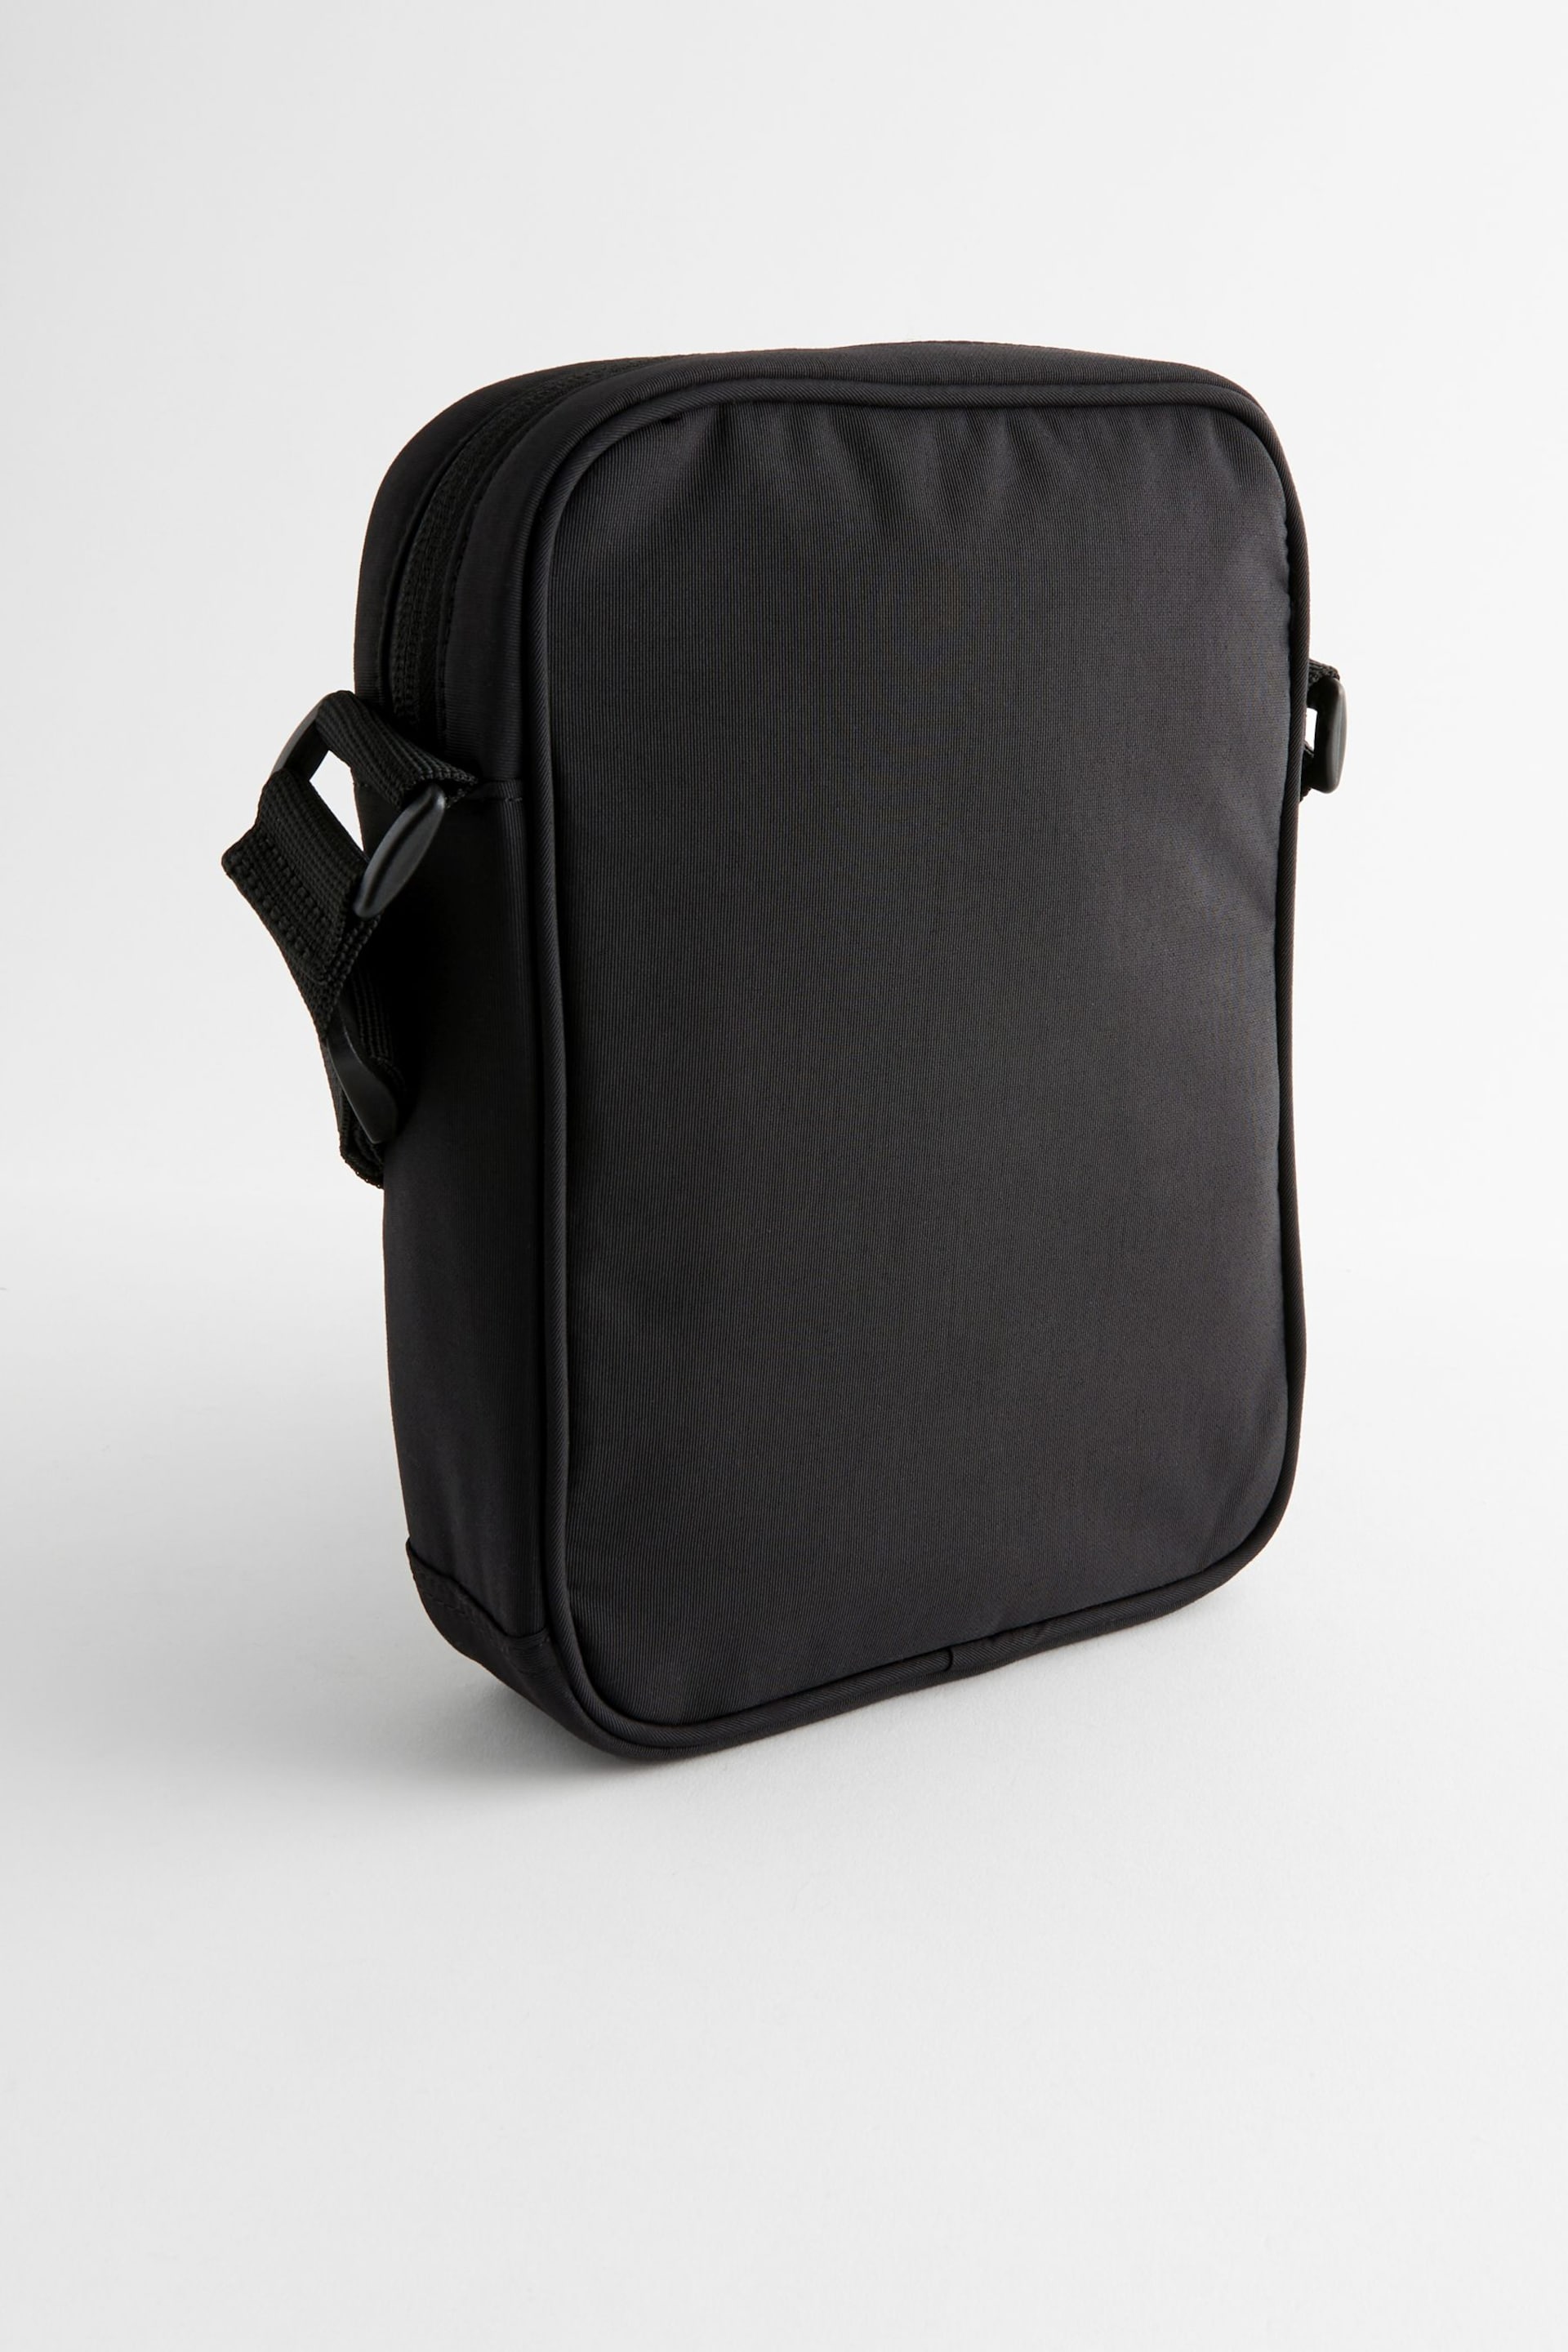 Black Cross-Body Bag - Image 3 of 5